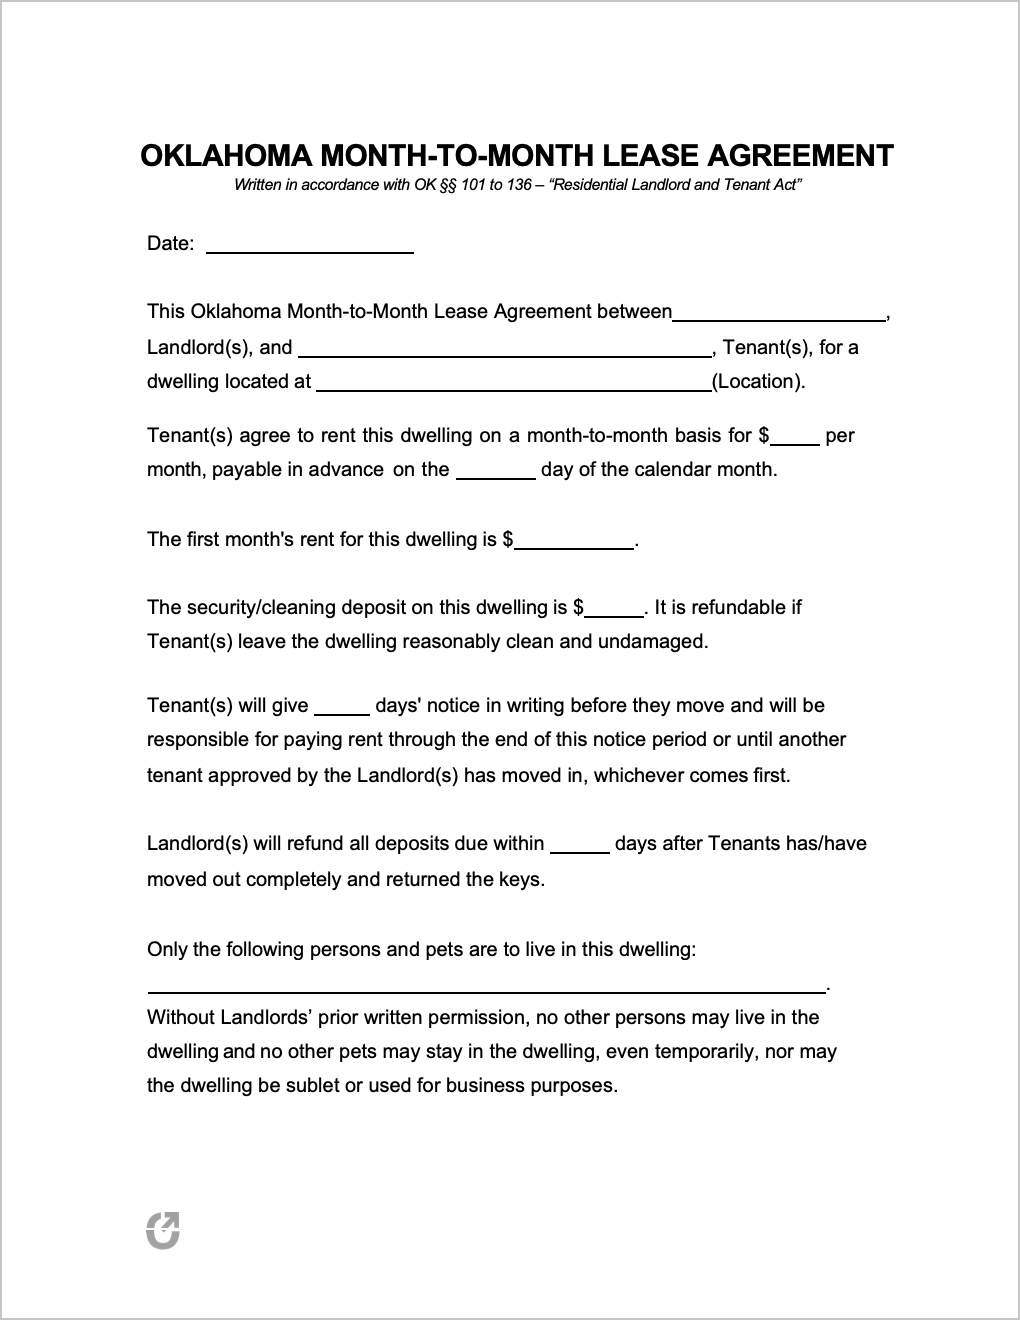 oklahoma-lease-agreement-template